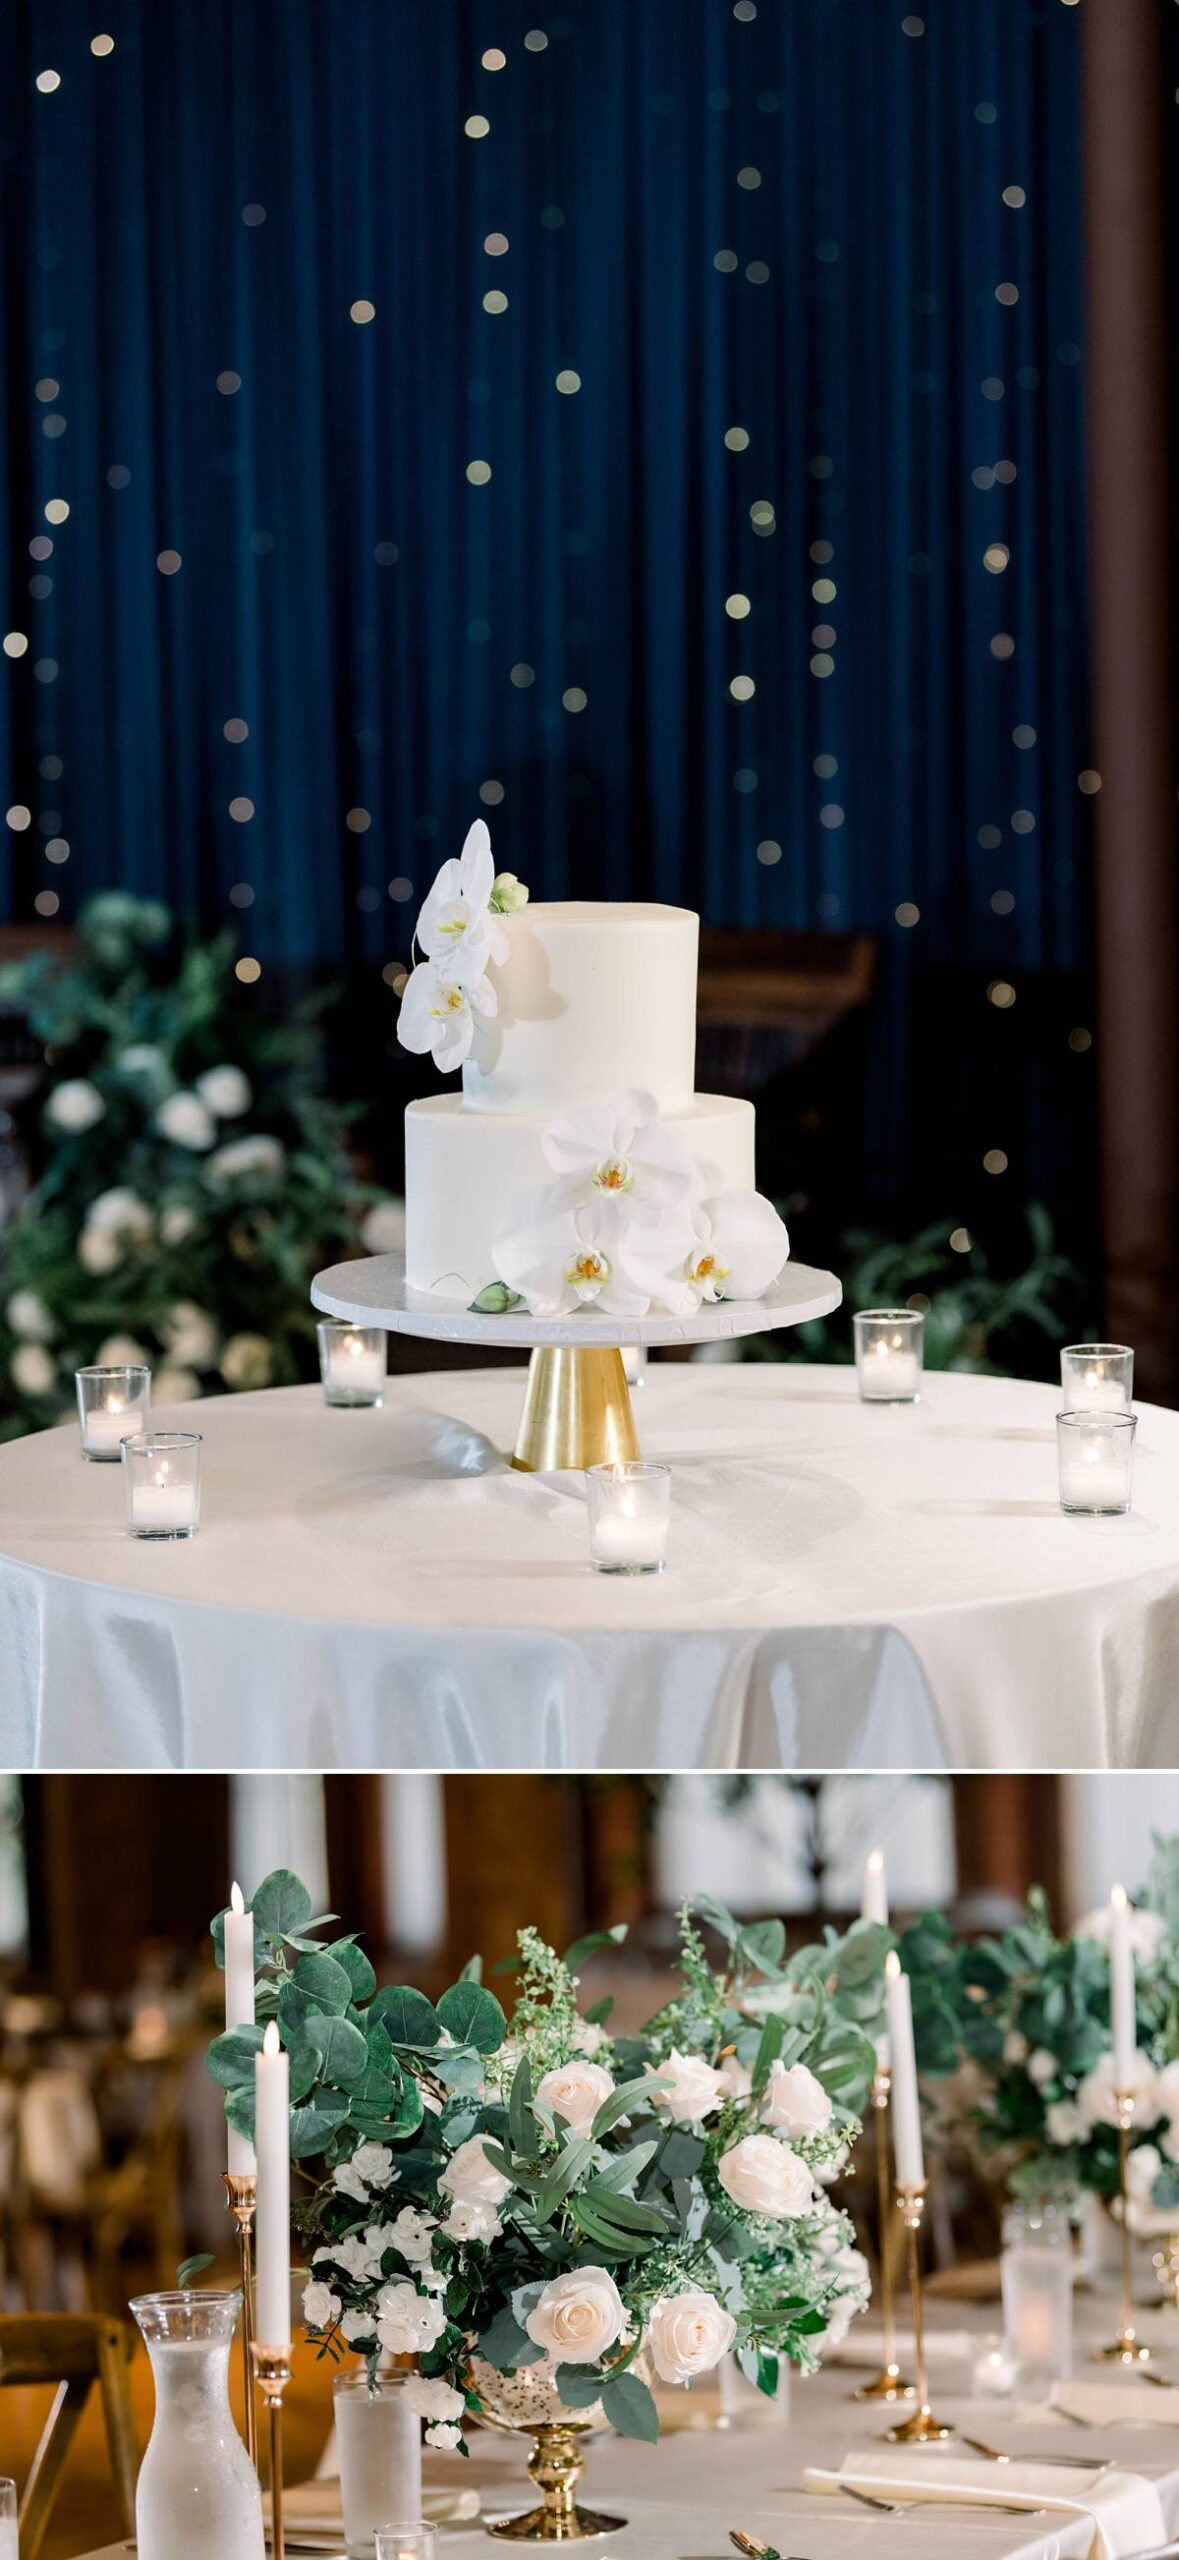 Minimalist floral decor and Chicago wedding cake at Bridgeport Arts Center